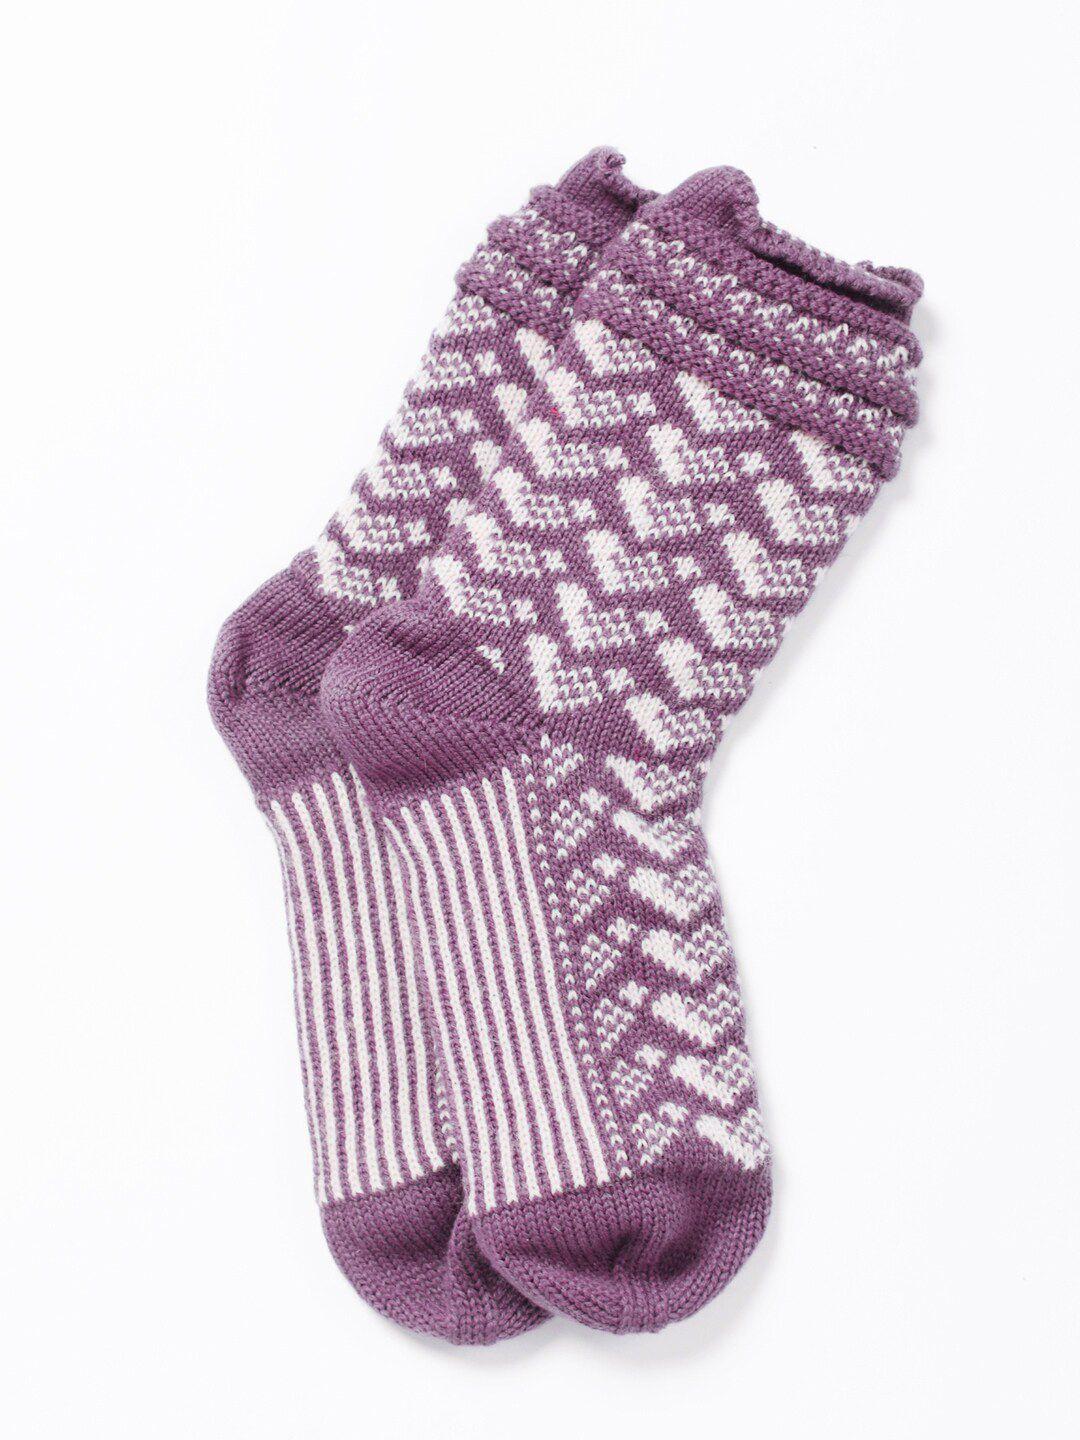 bharatasya purple knitted winter woolen socks for kids